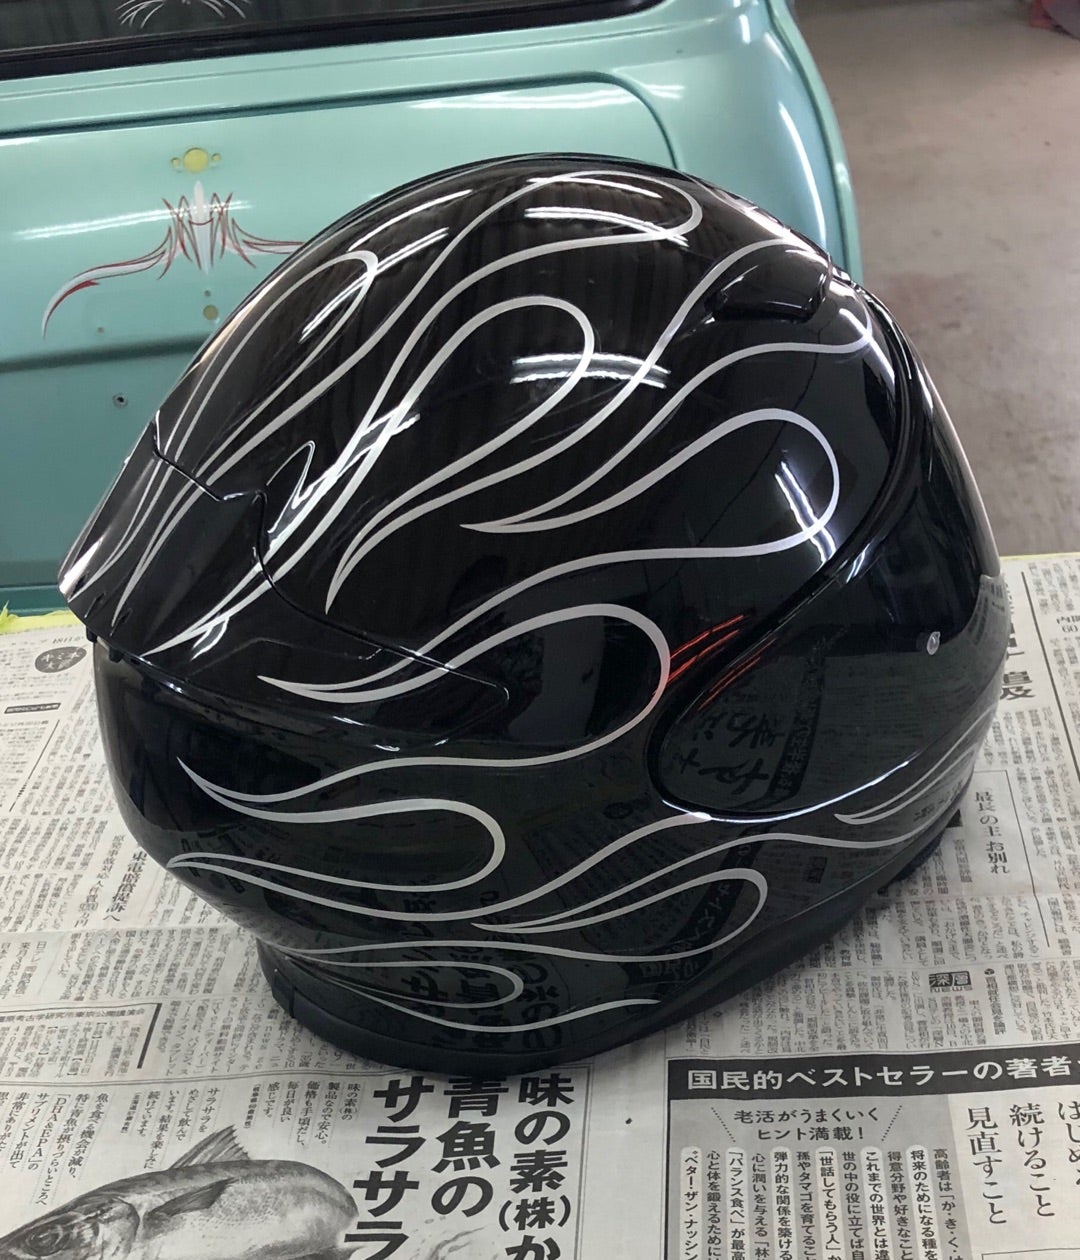 SHOEI ヘルメット ピンストライプ | T&Mgarage